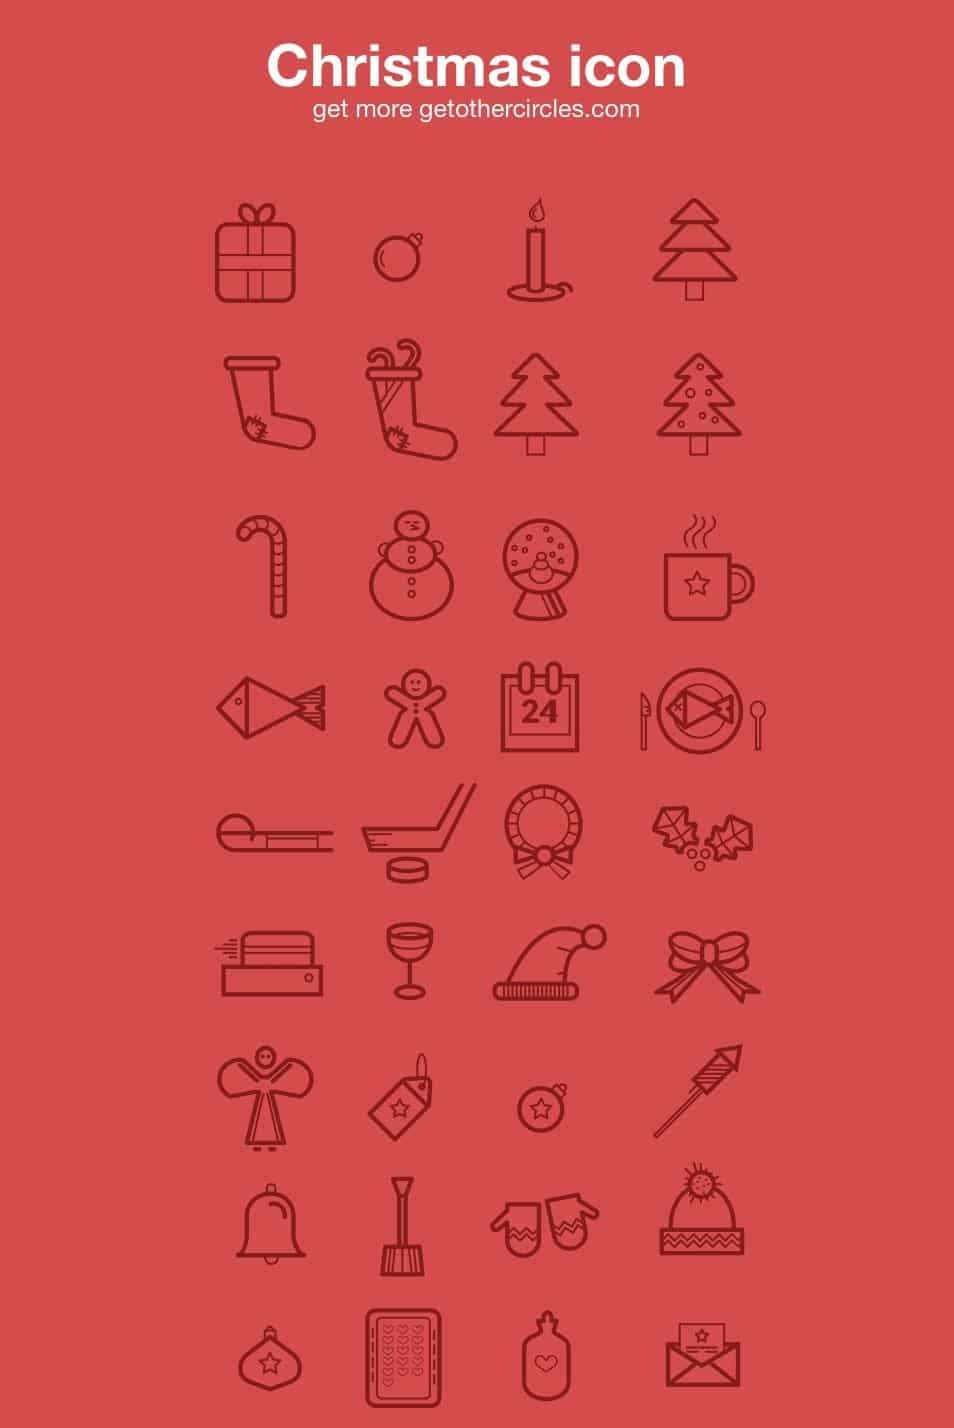 36 Free Christmas Icons